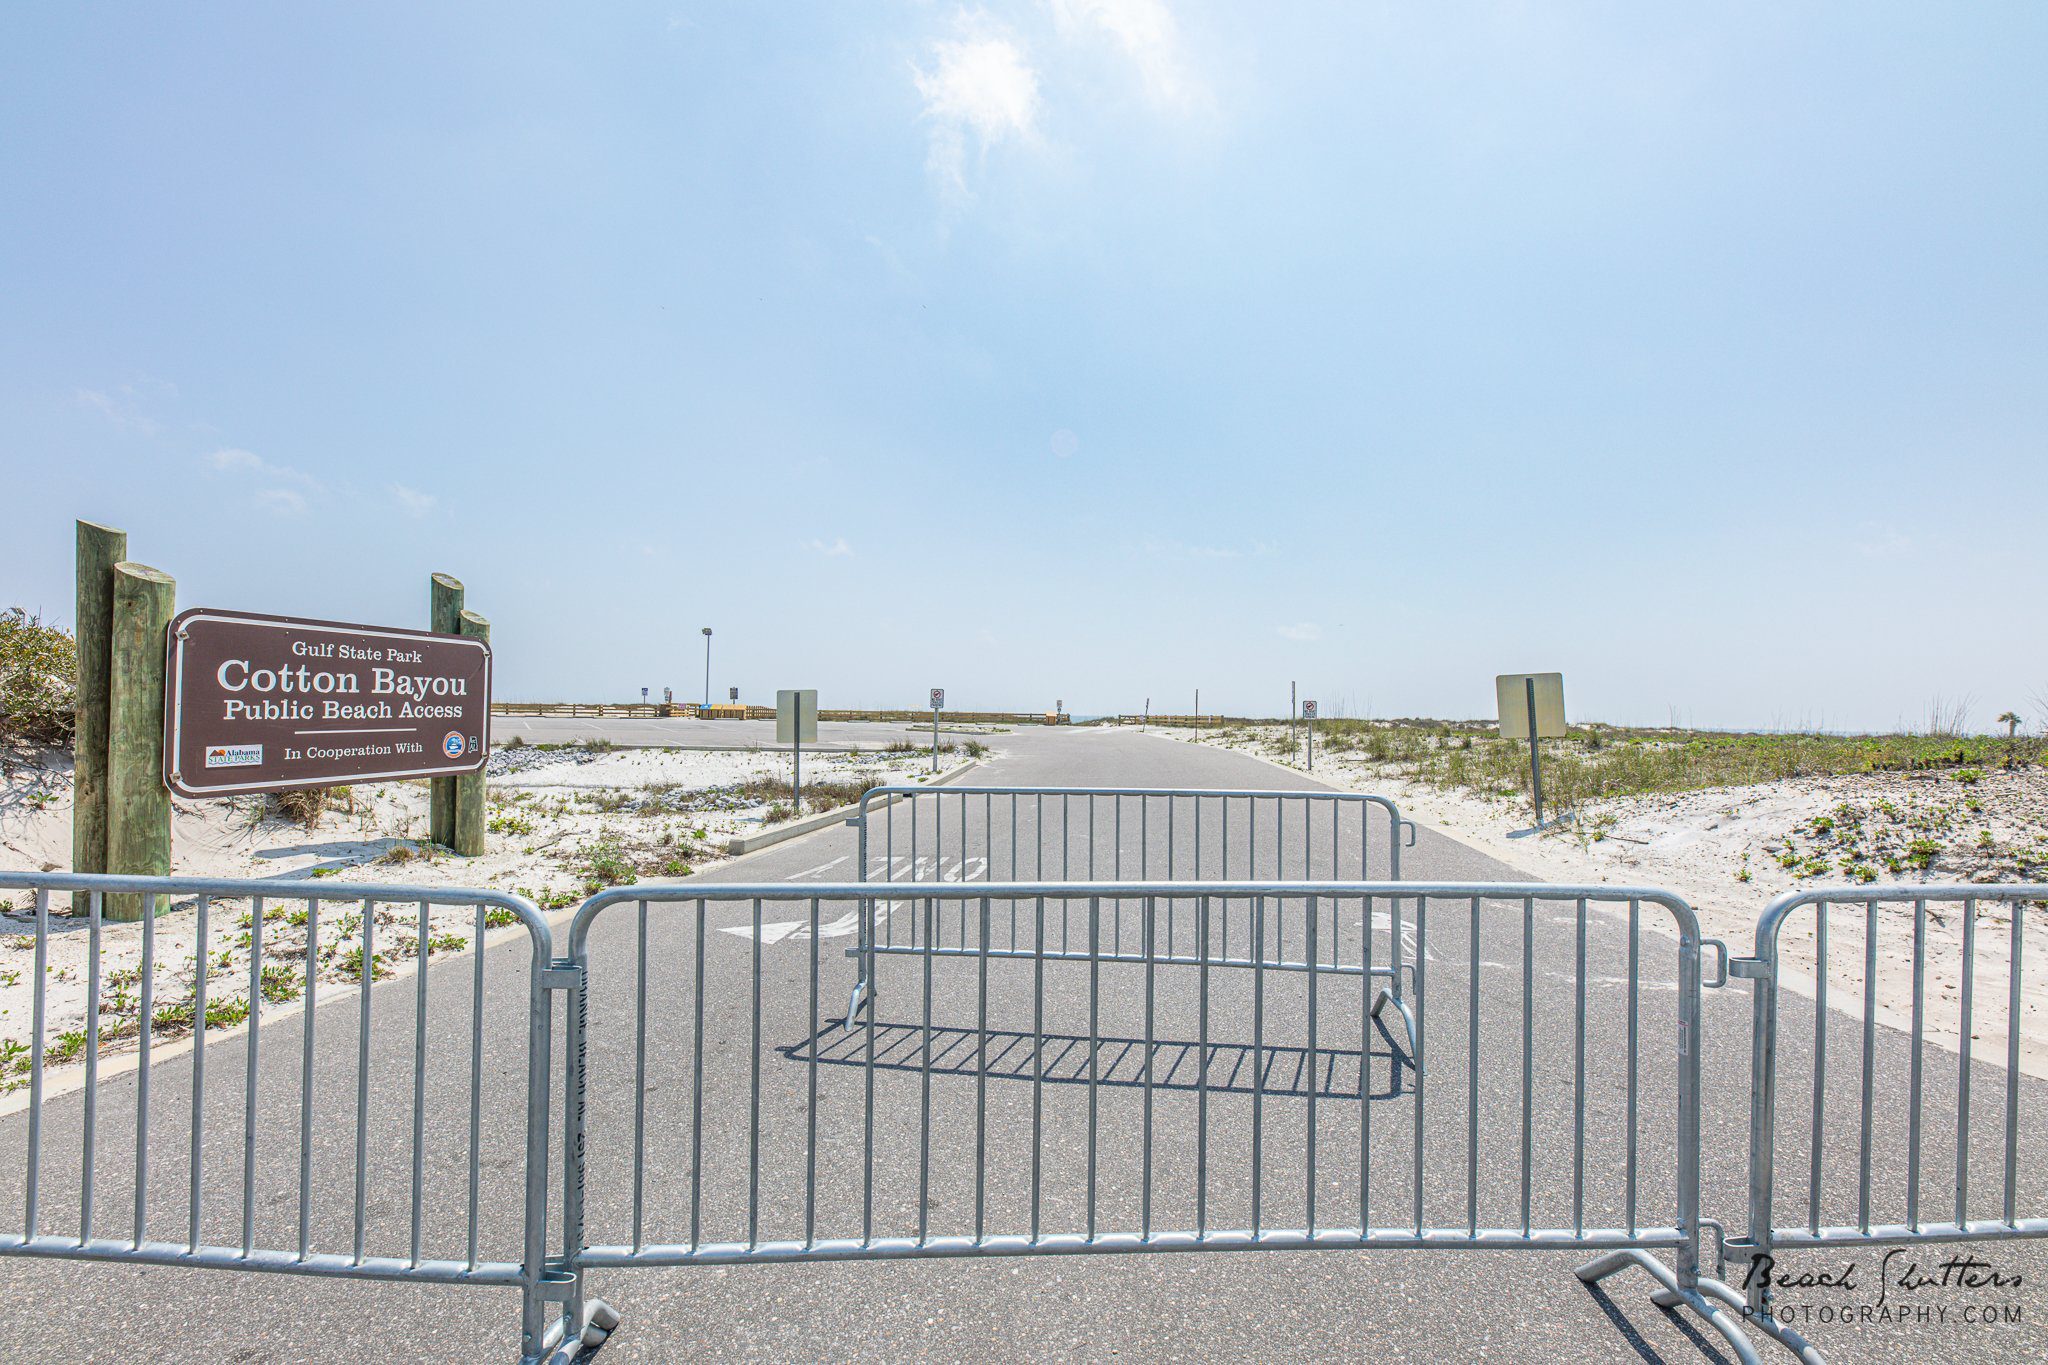 Cotton Bayou Public Beach Access is closed